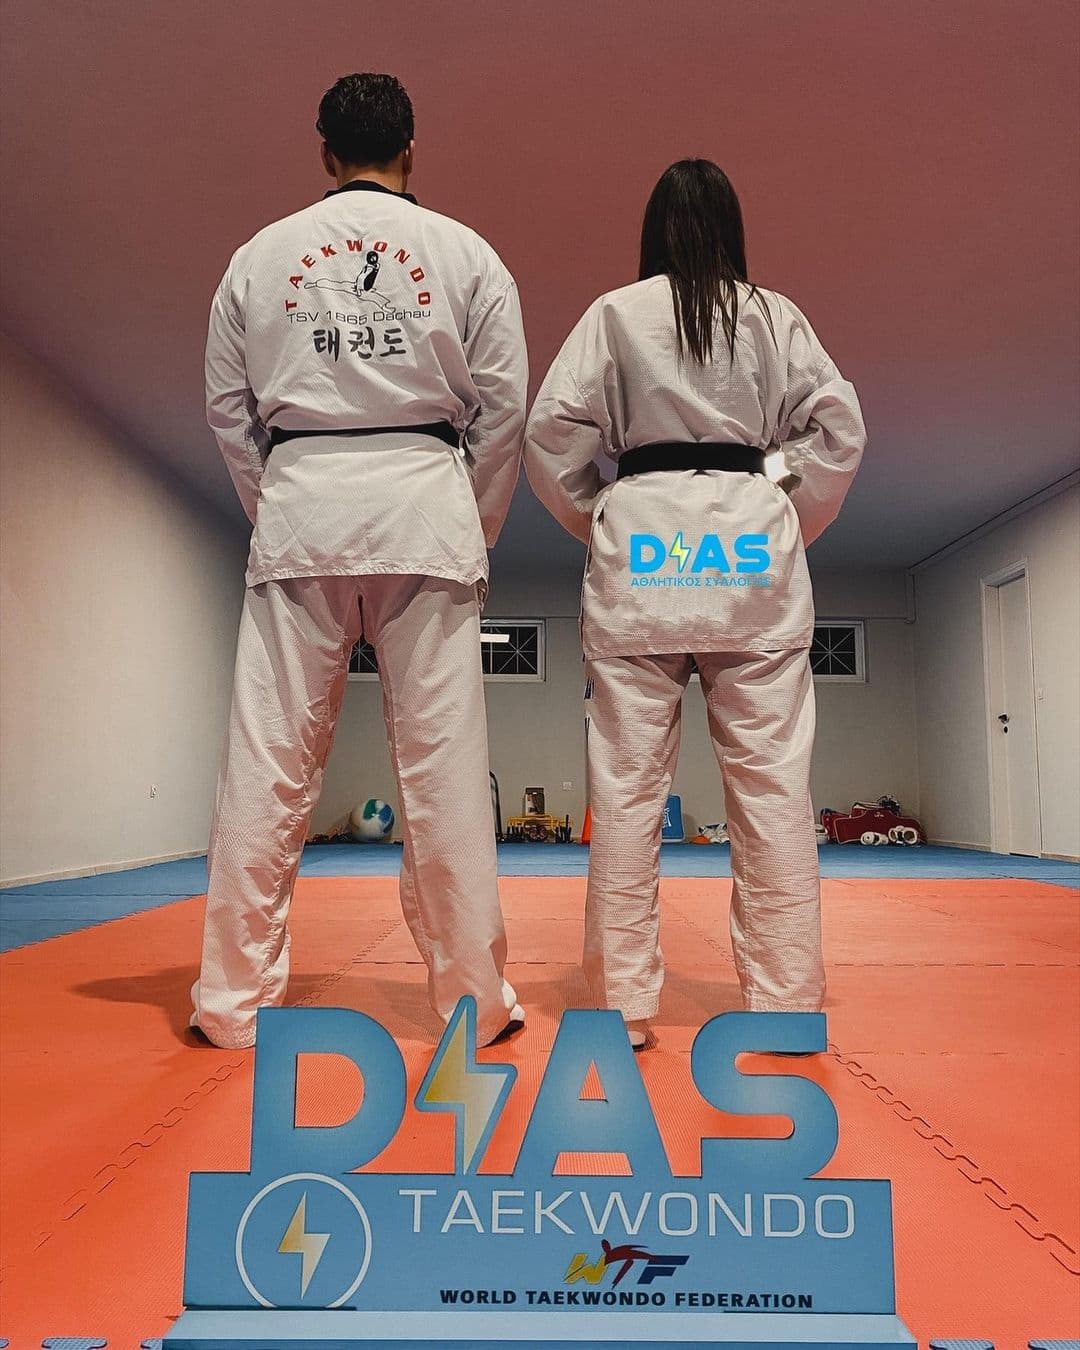 dias-athletic-club-kalamata-taekwondo-sportshunter-6